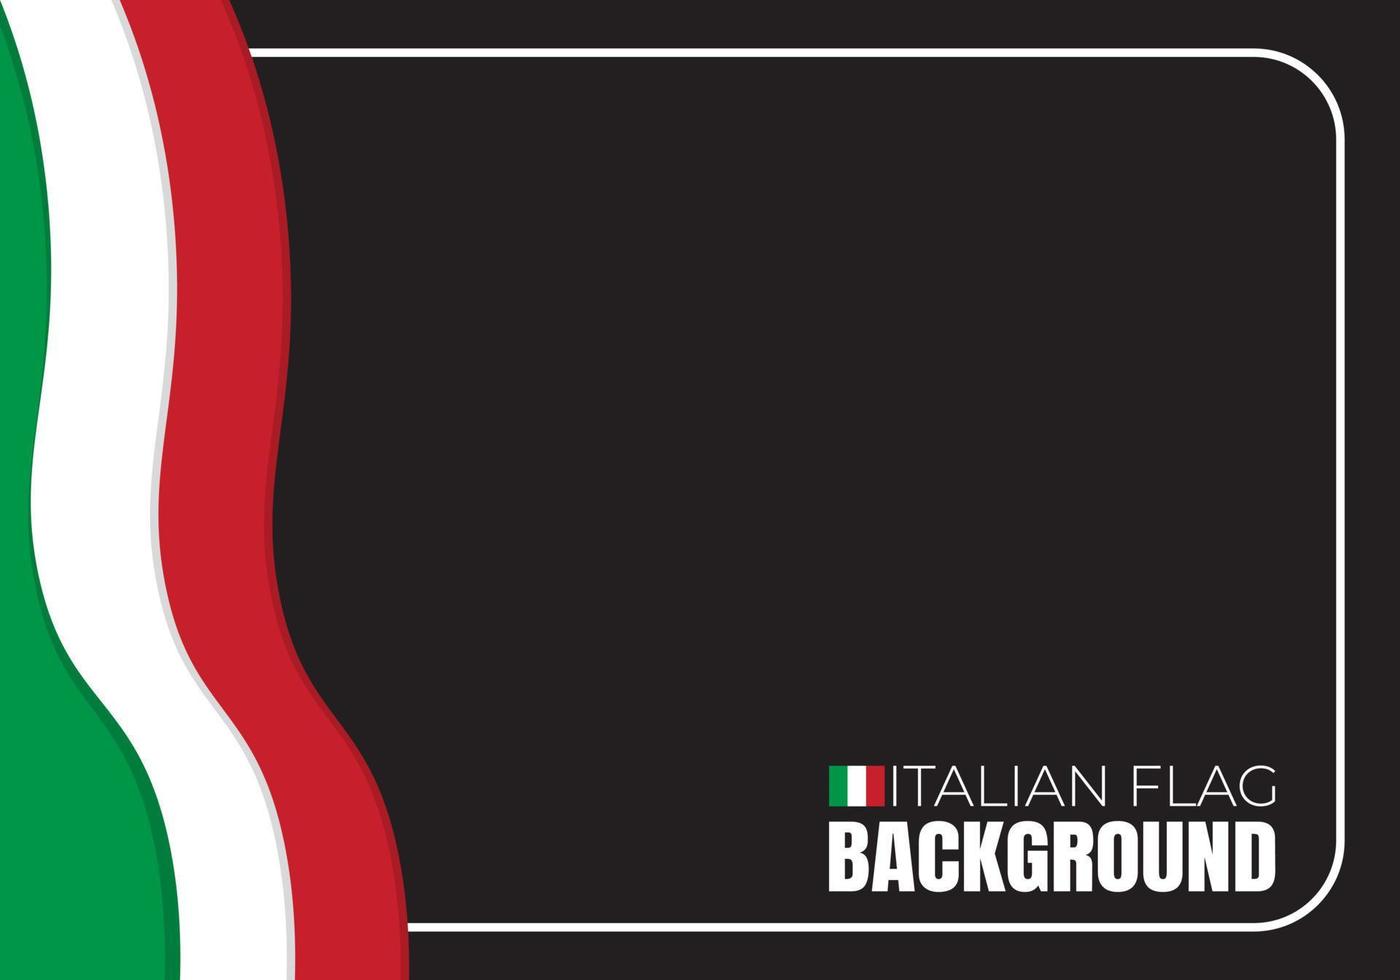 Blank Italian Flag background. Suitable for various celebrations. Vector illustration